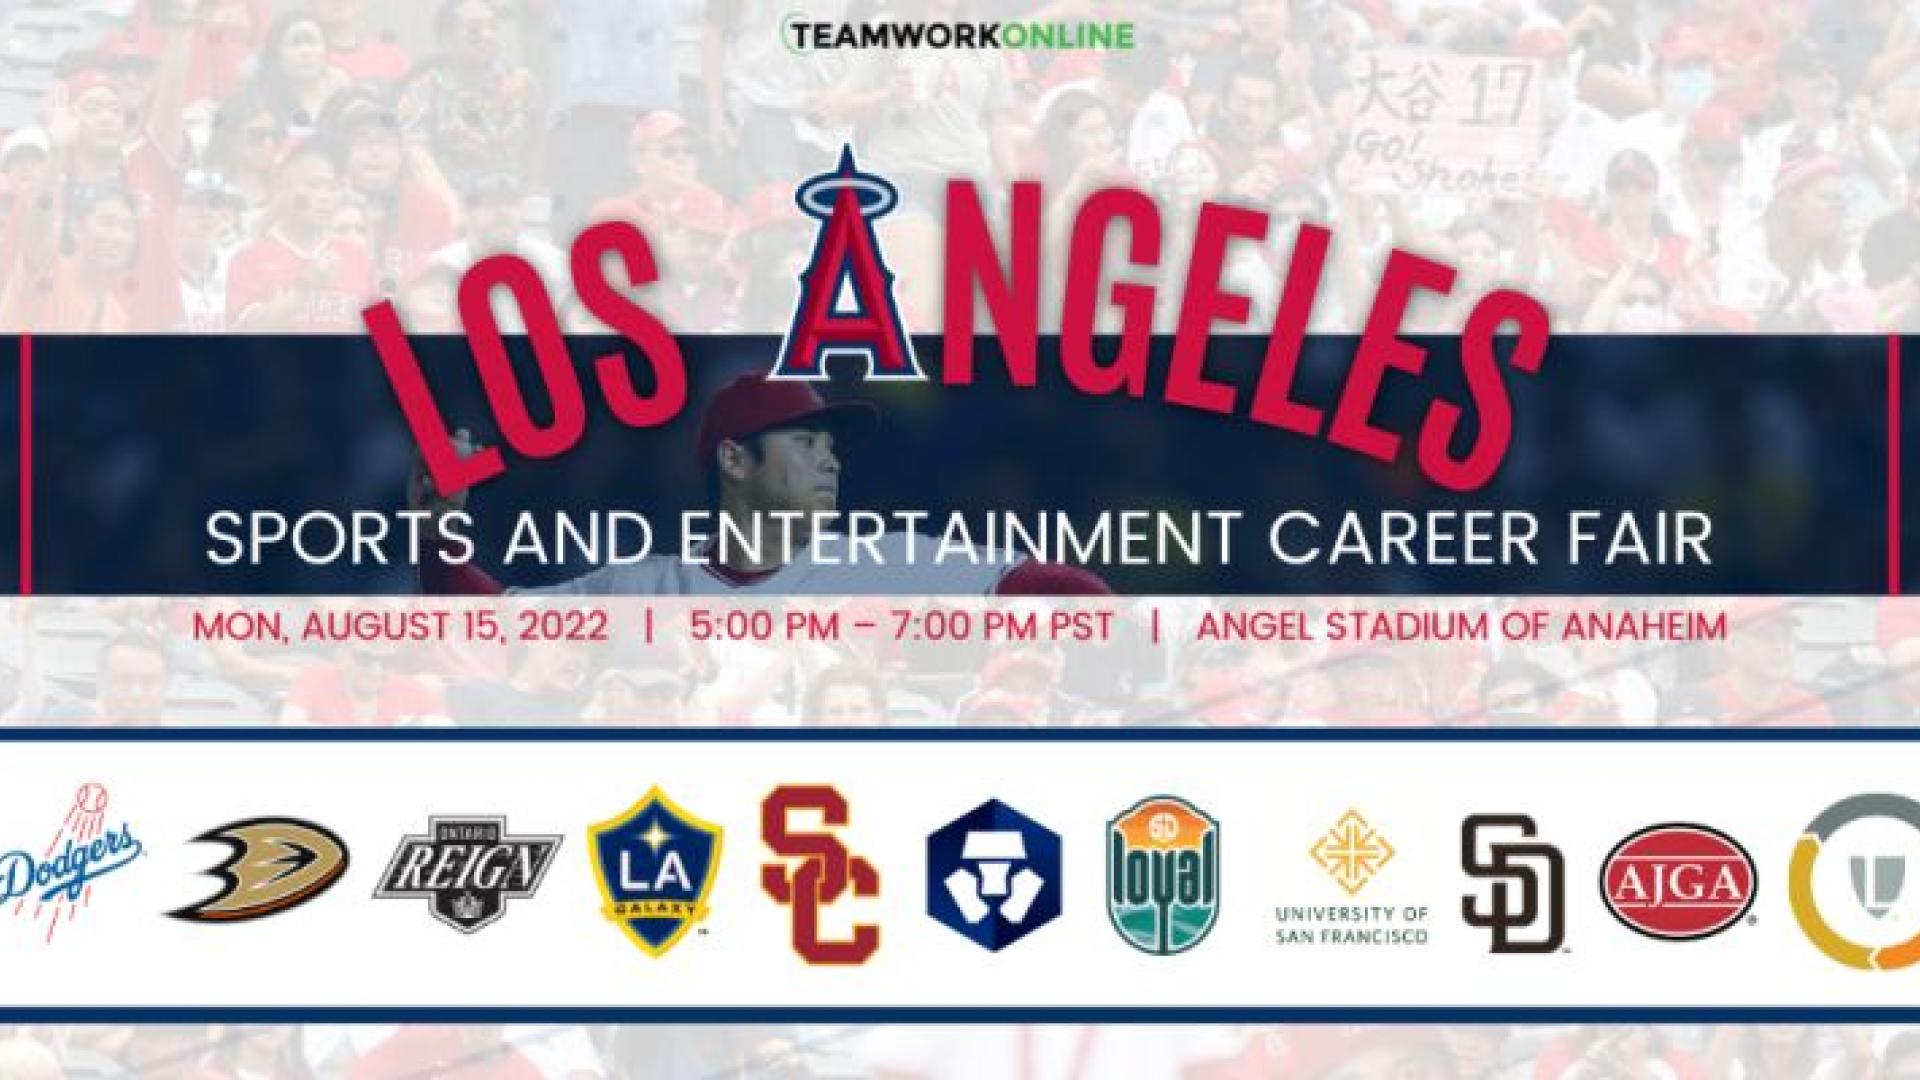 Los Angeles Sports and Entertainment Career Fair